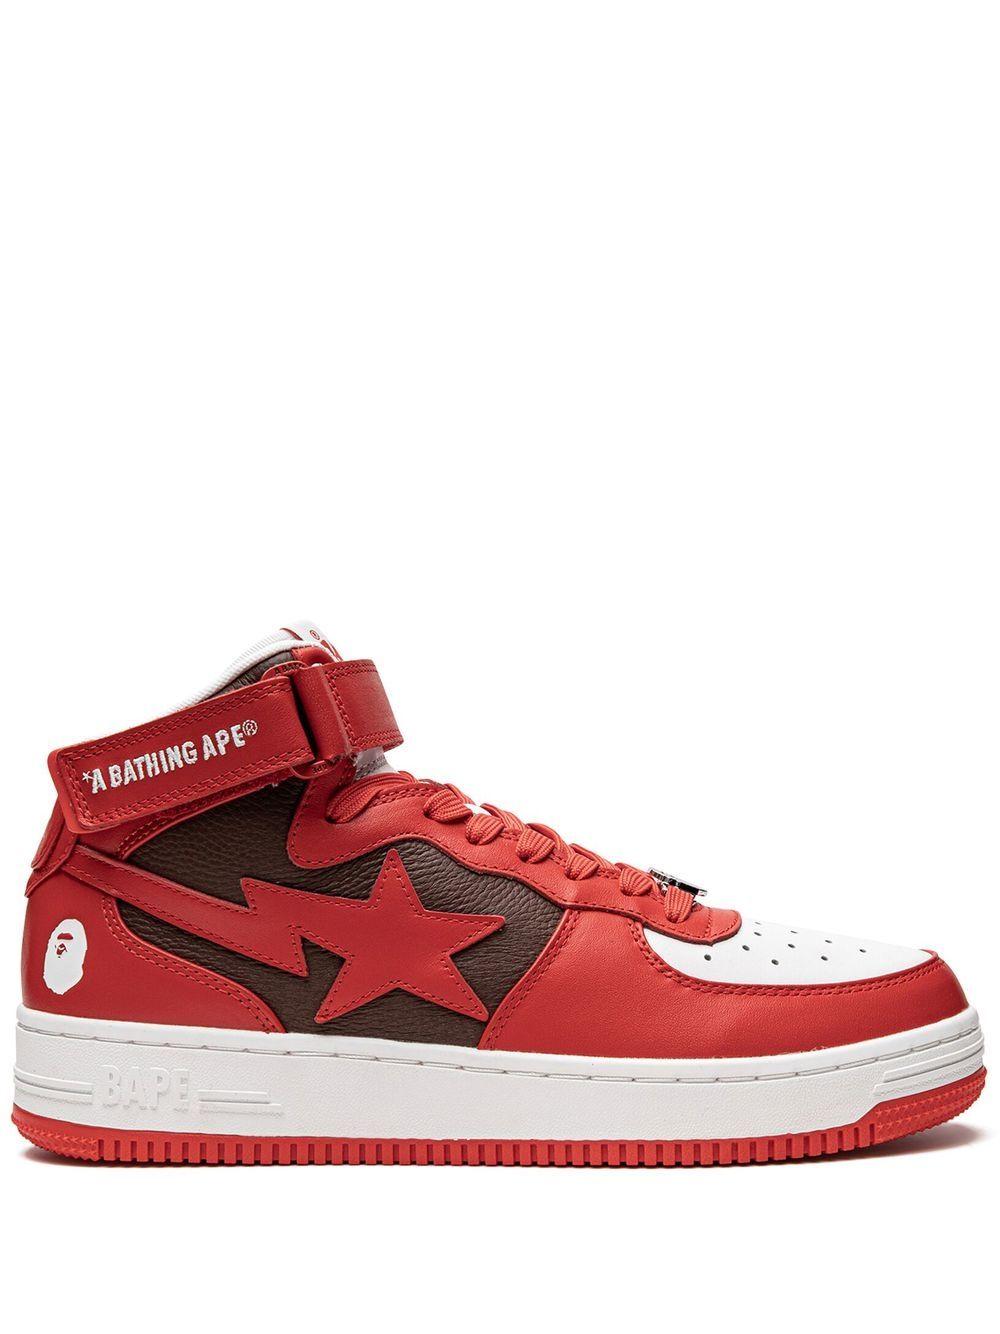 A Bathing Ape Leather Bape Sta Mi #2 L Sneakers in Red | Lyst